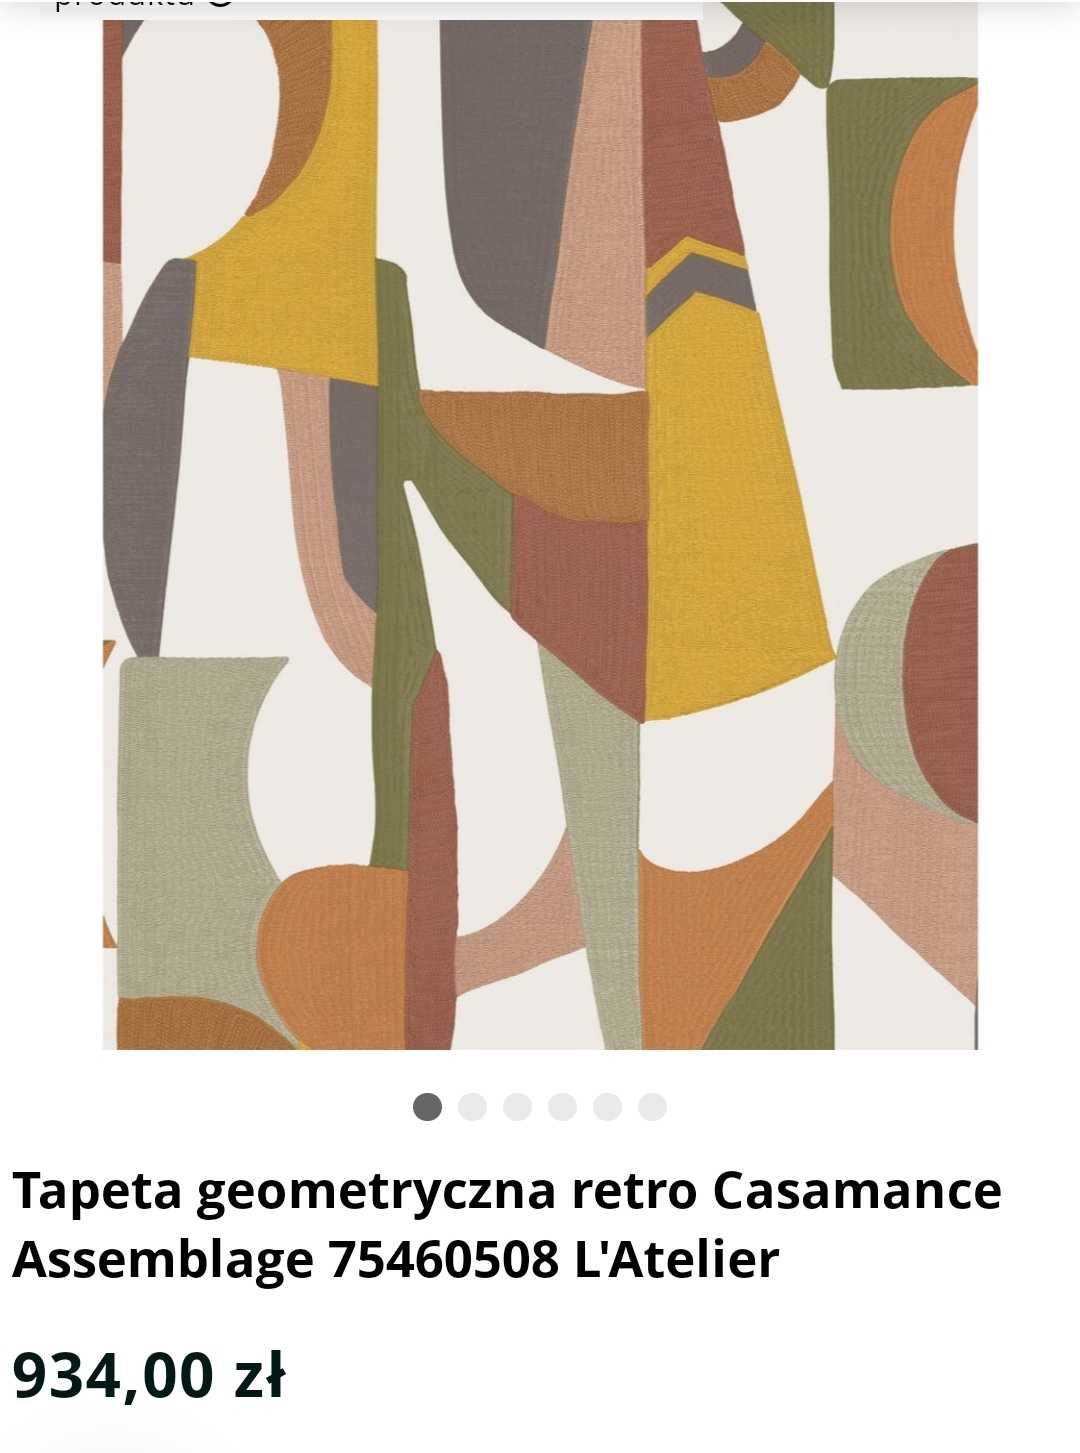 Tapeta geometryczna retro Casamance Assemblage  L'Atelier